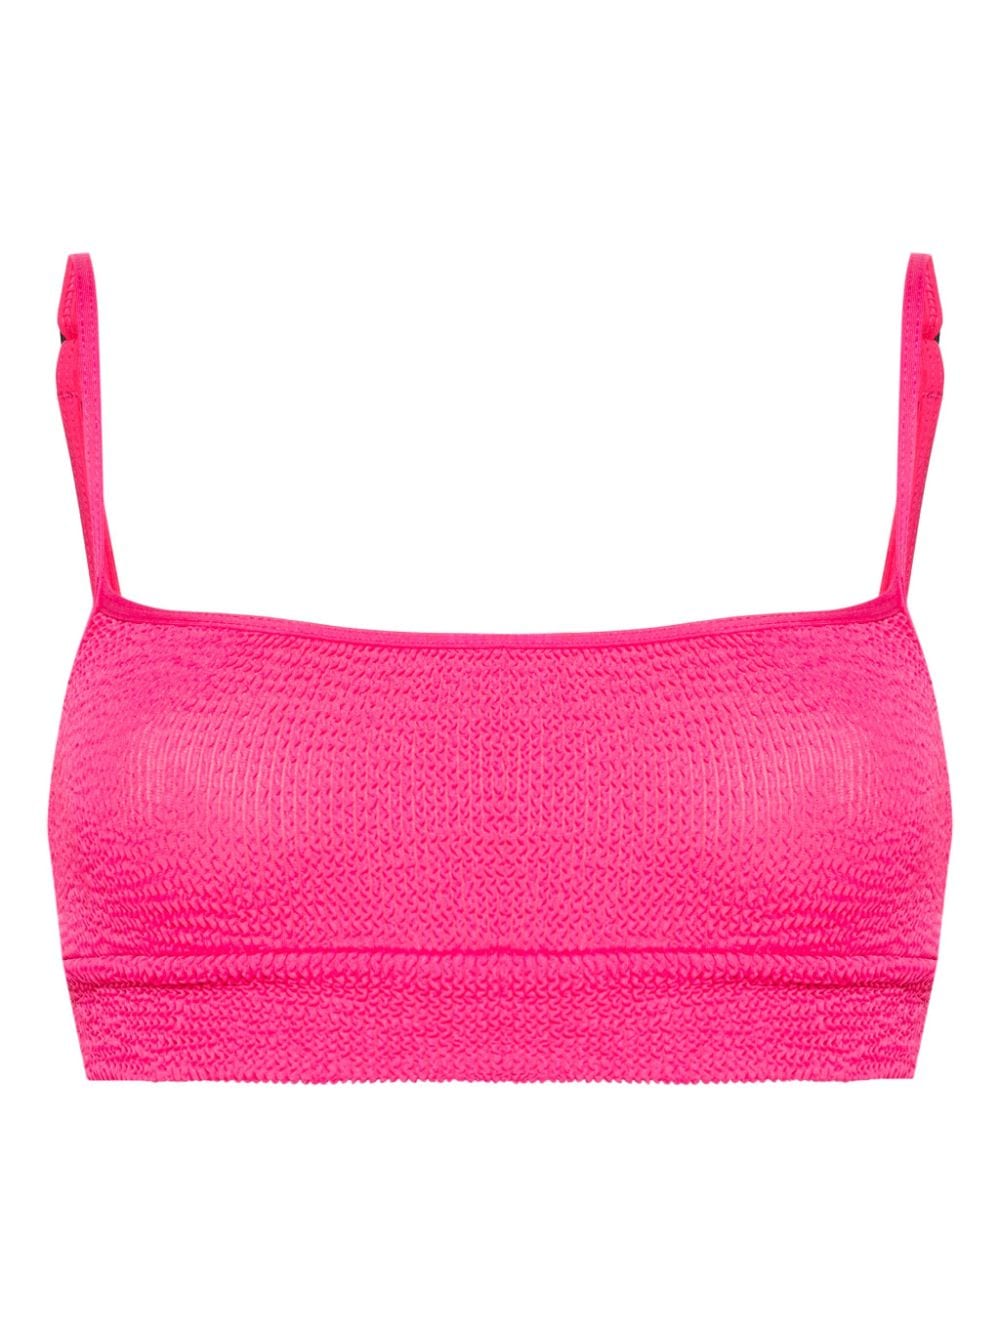 Bondeye Strap Saint Bikini Top In Pink